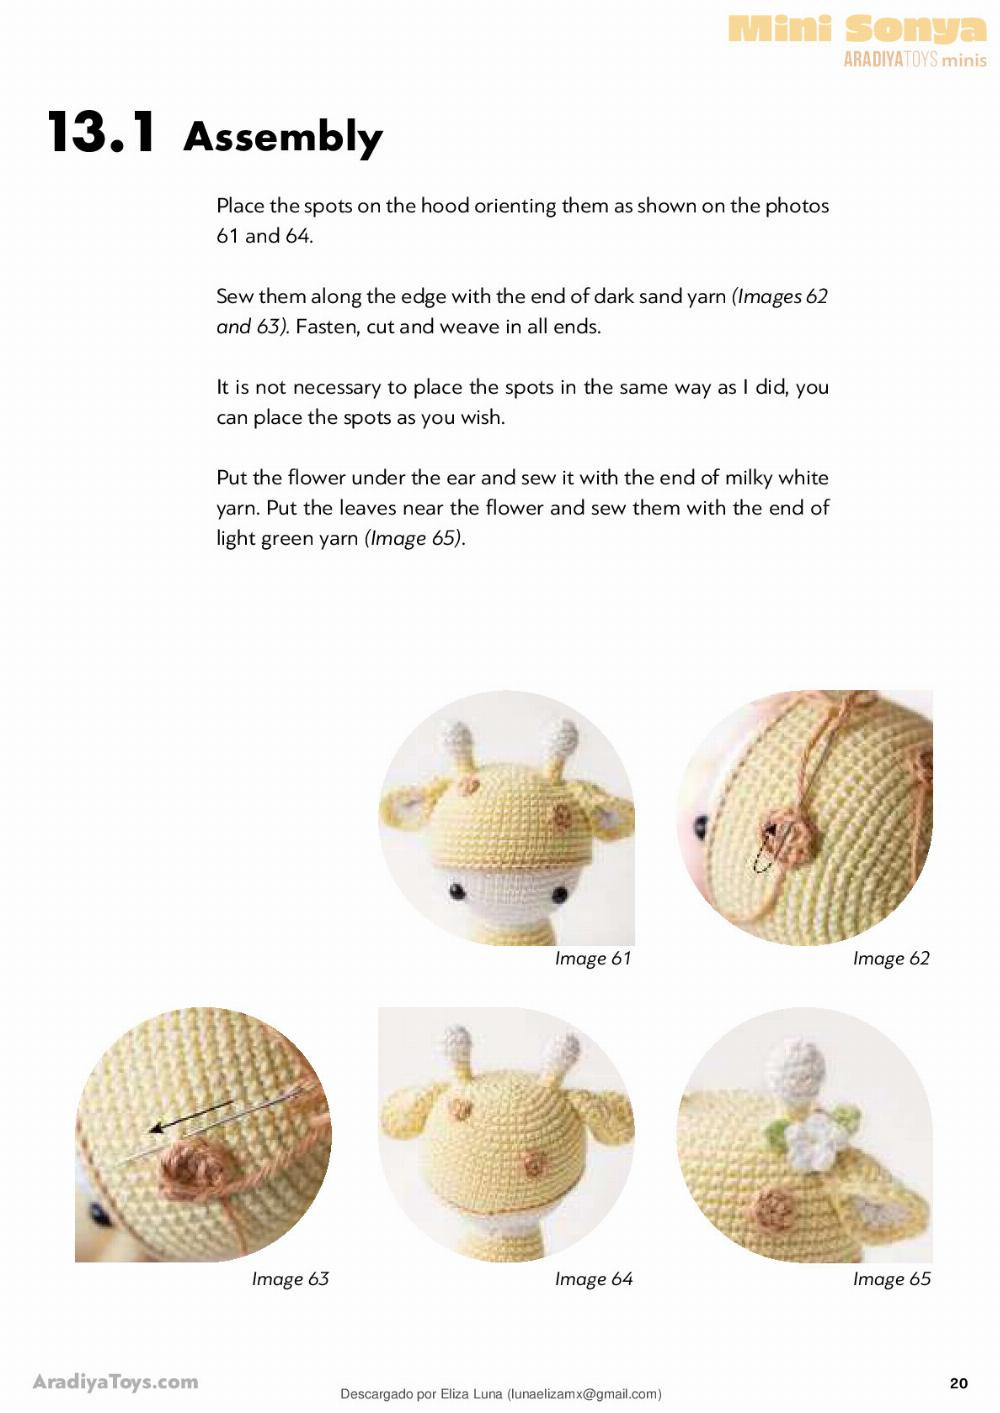 Mini Sonya AradiyaToys minis Mini Sonya AradiyaToys minis Crochet pattern